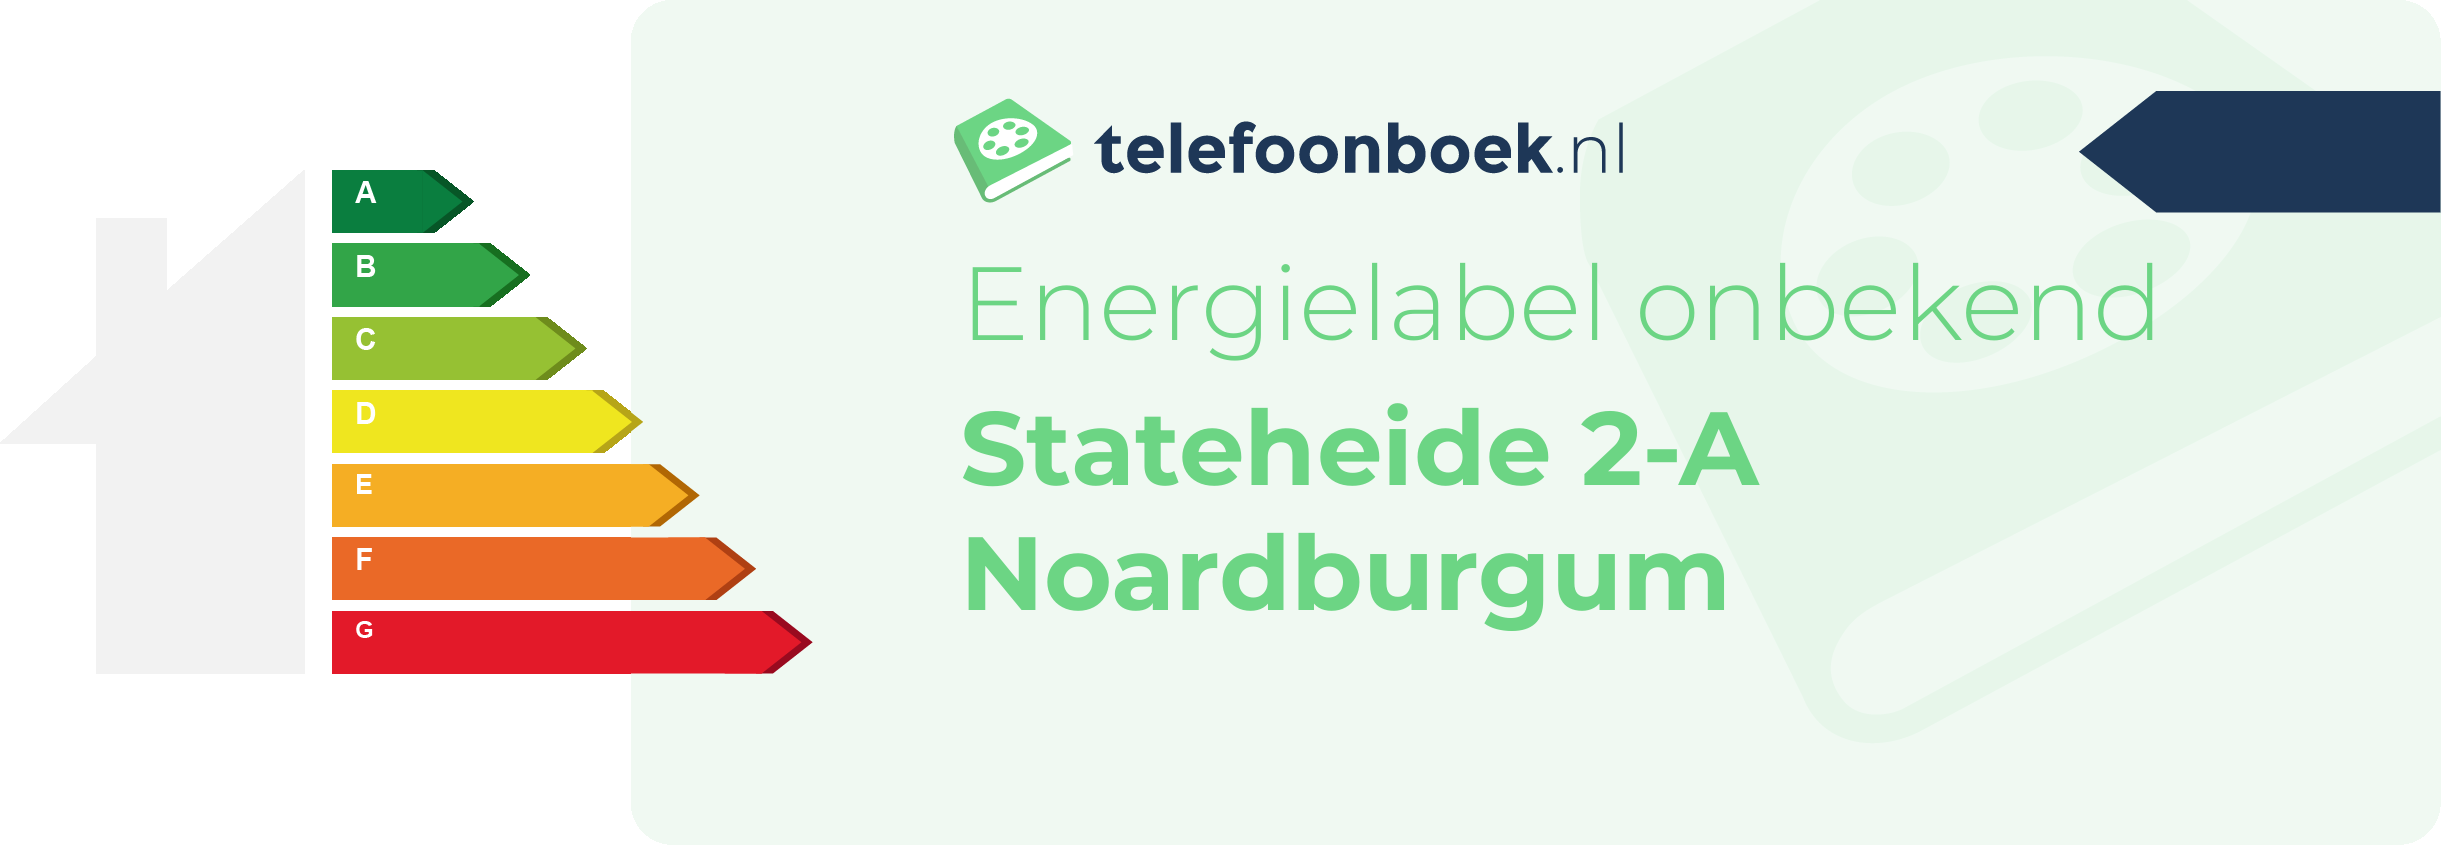 Energielabel Stateheide 2-A Noardburgum